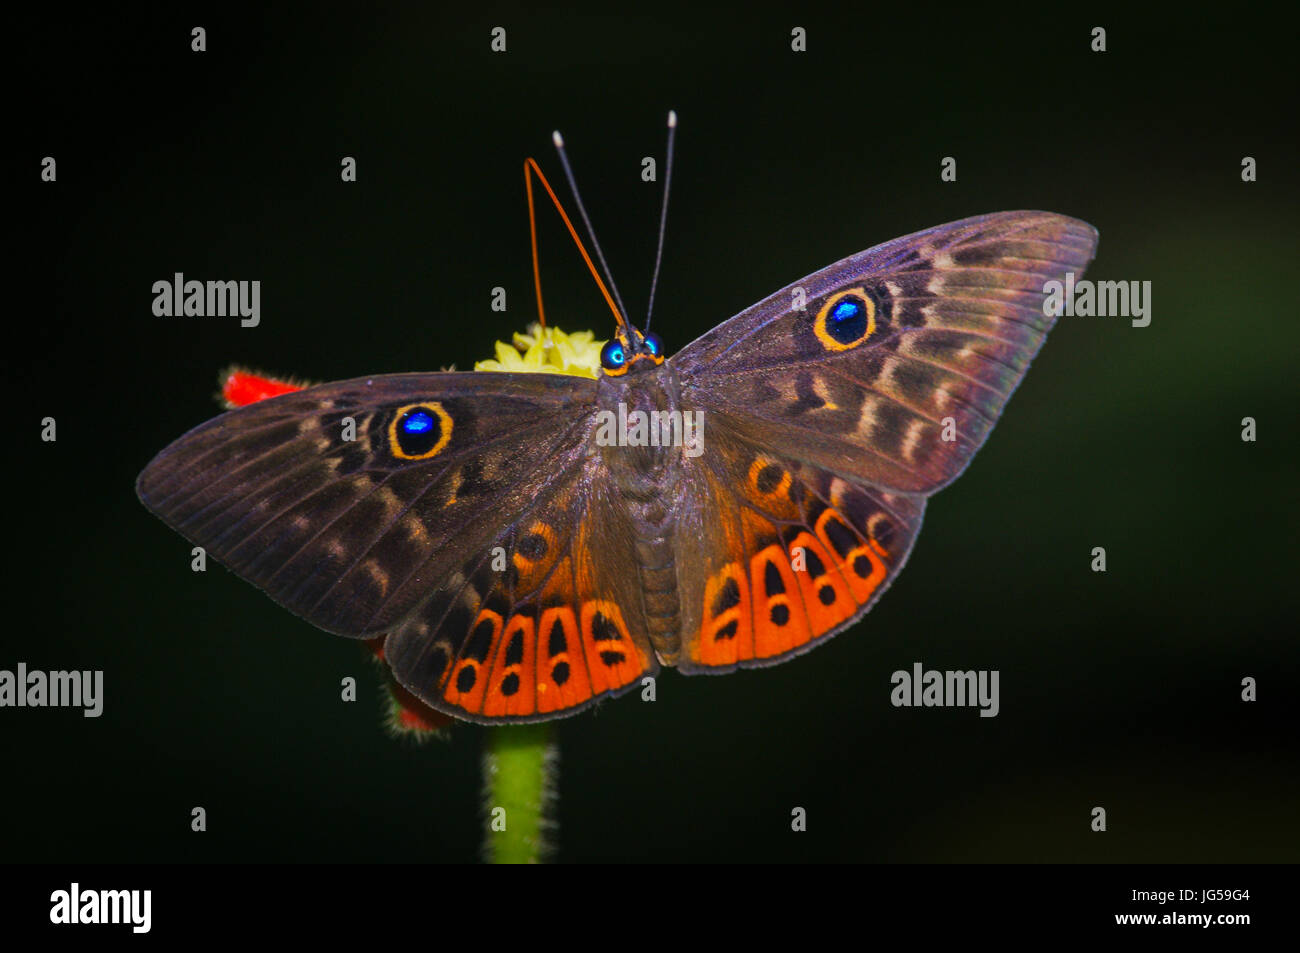 Eurybia butterflies butterfly image taken in Panama Stock Photo